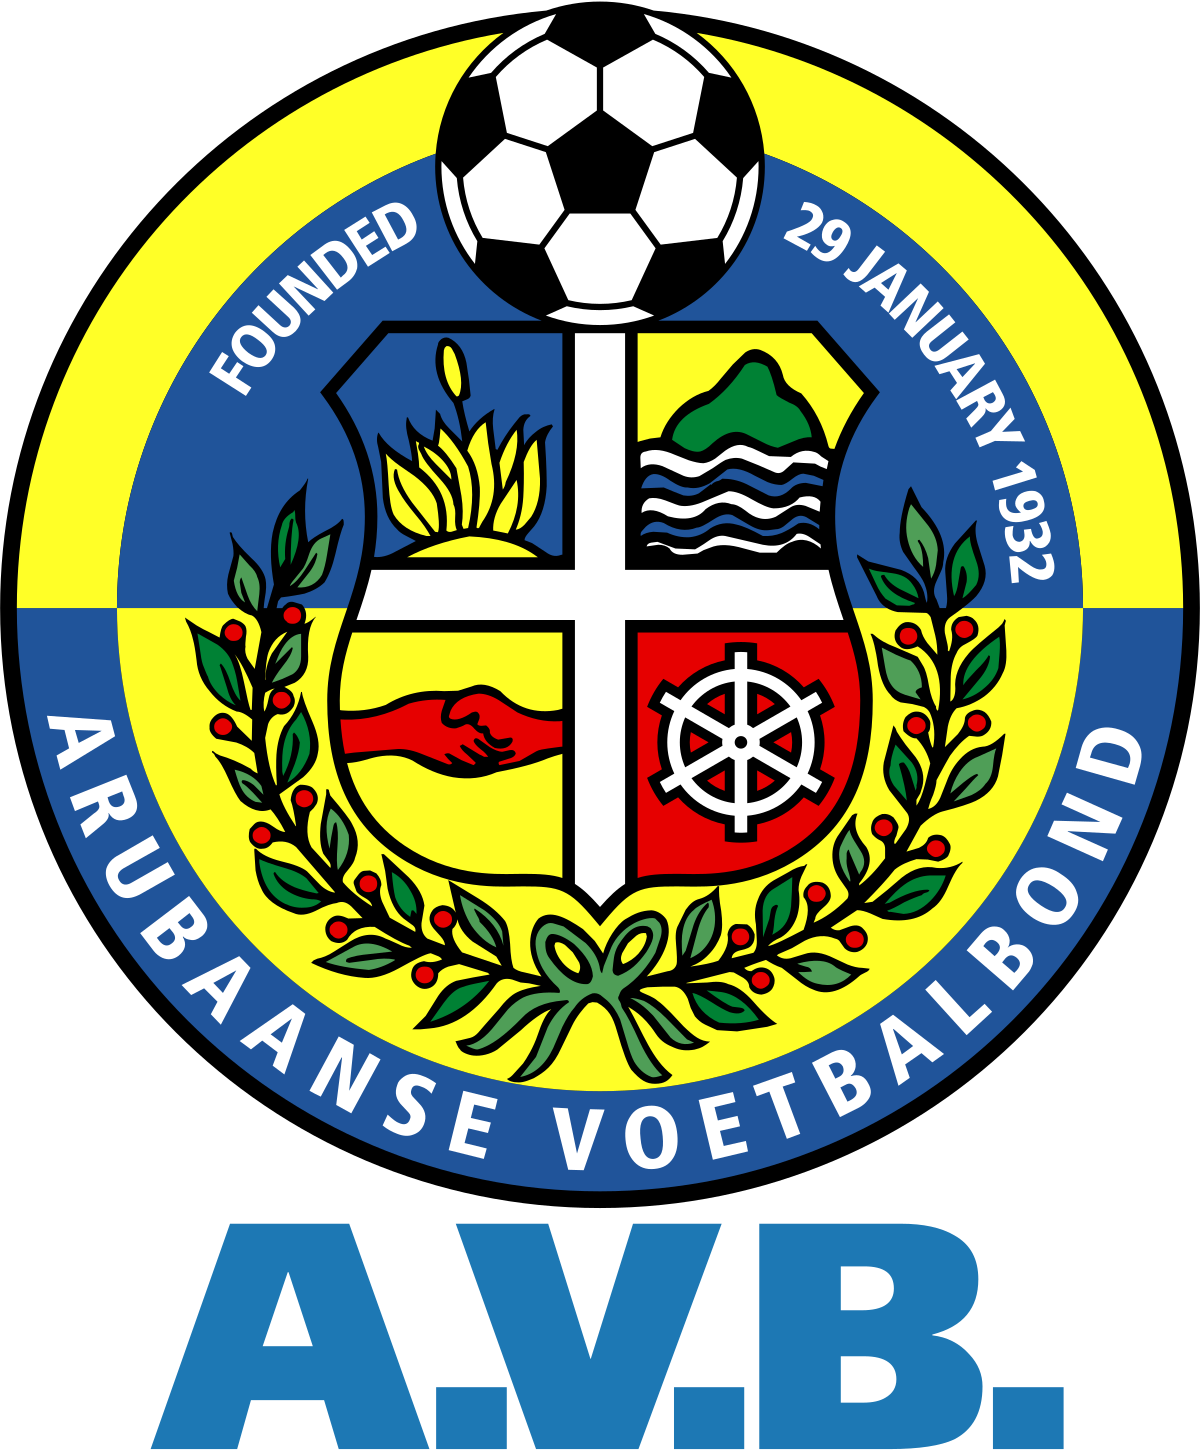 Aruba team logo